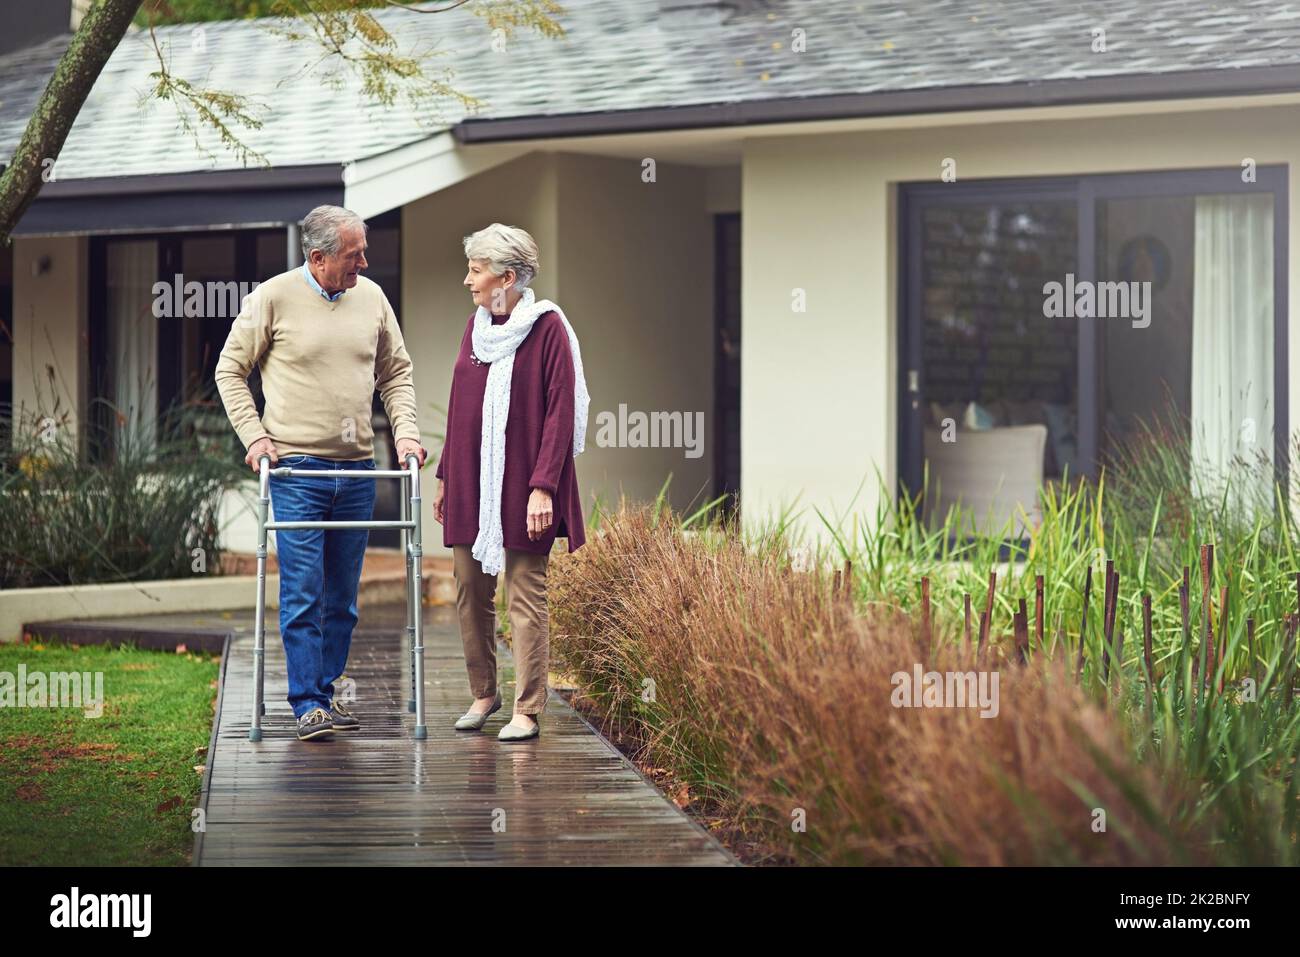 True love is timeless. Shot of a loving senior couple taking a walk outside. Stock Photo